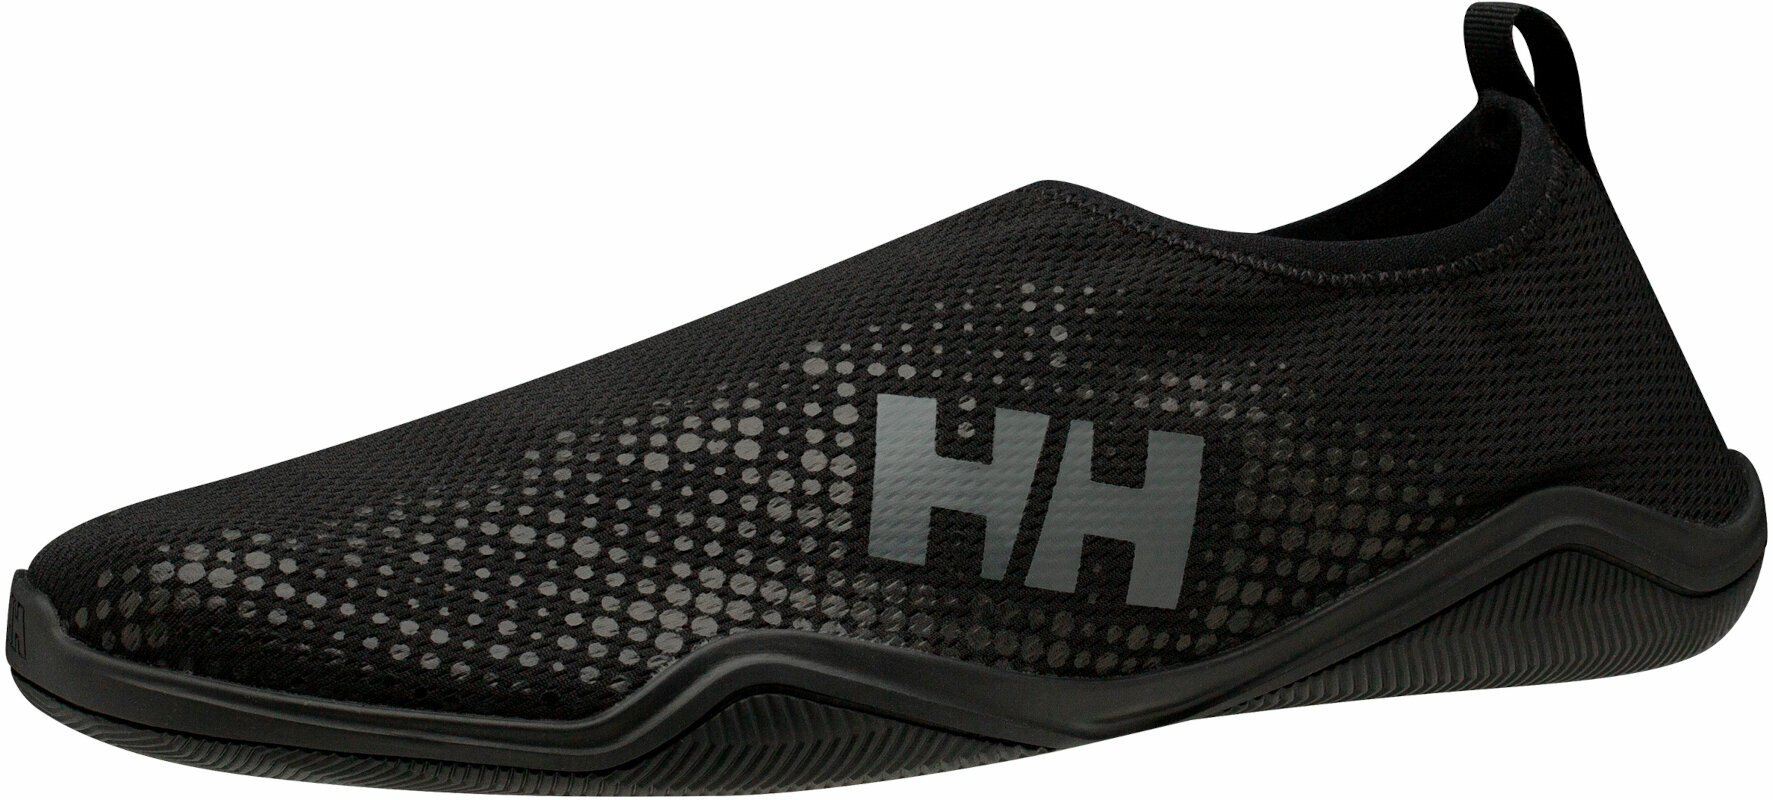 Buty żeglarskie Helly Hansen Men's Crest Watermoc Black/Charcoal 42